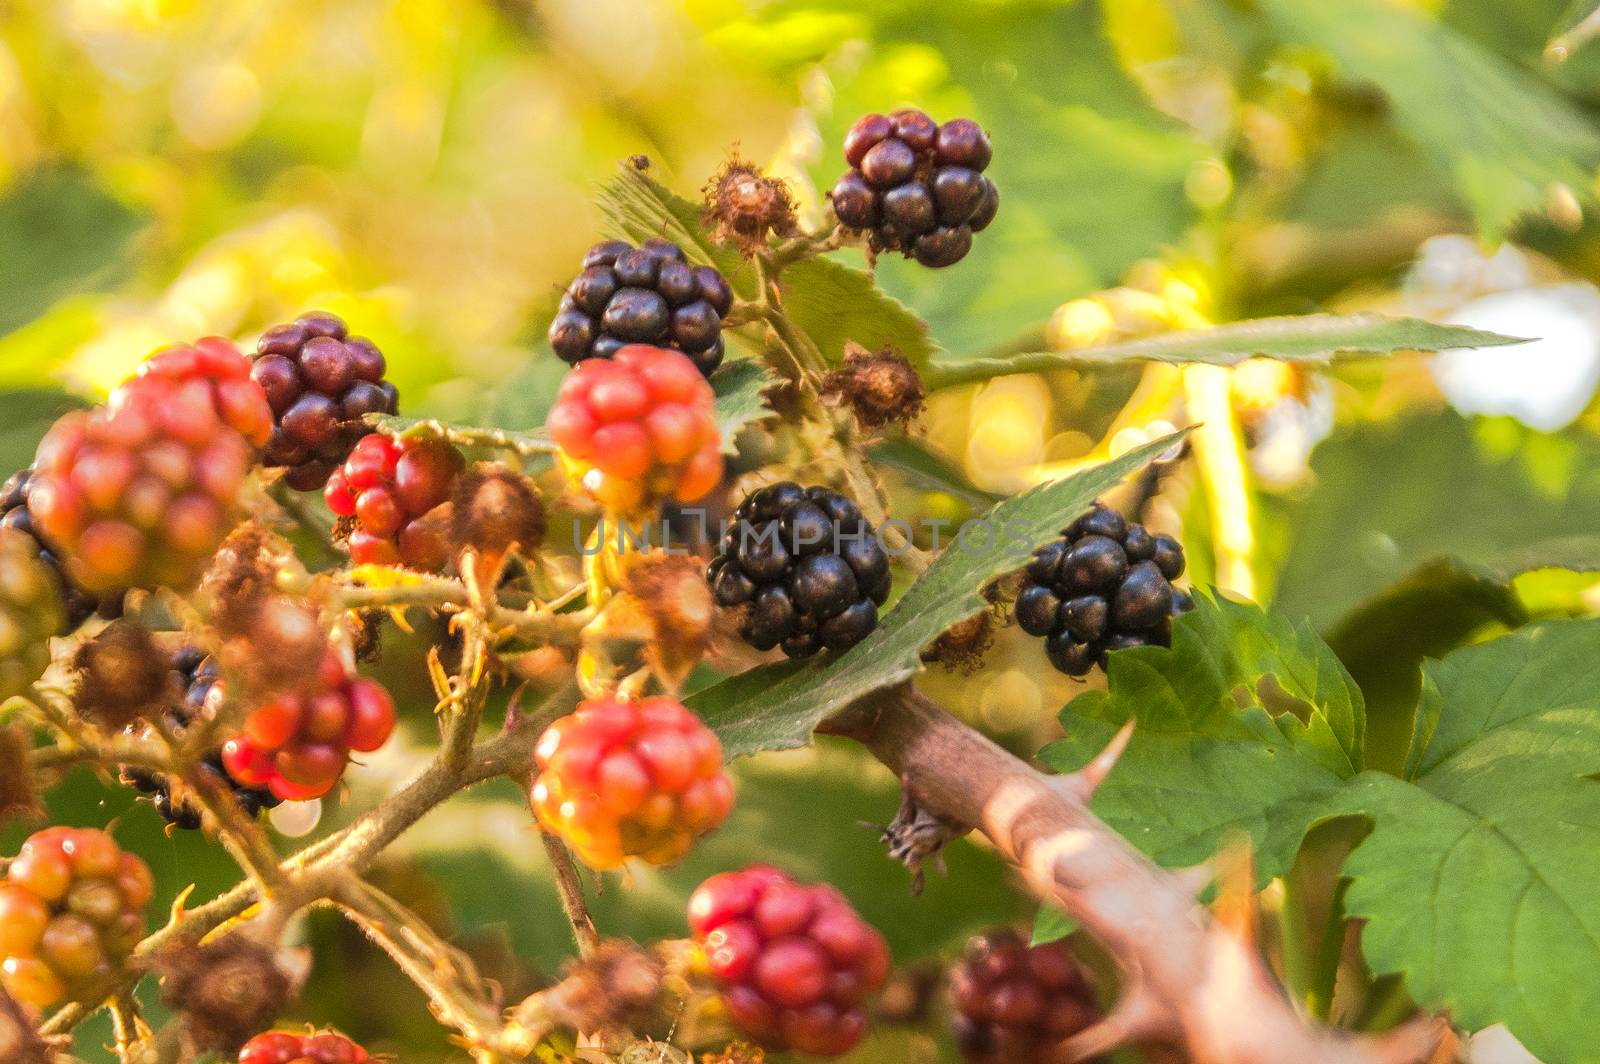 Blackberries ripened on the bush and speyuschaya in the evening sun